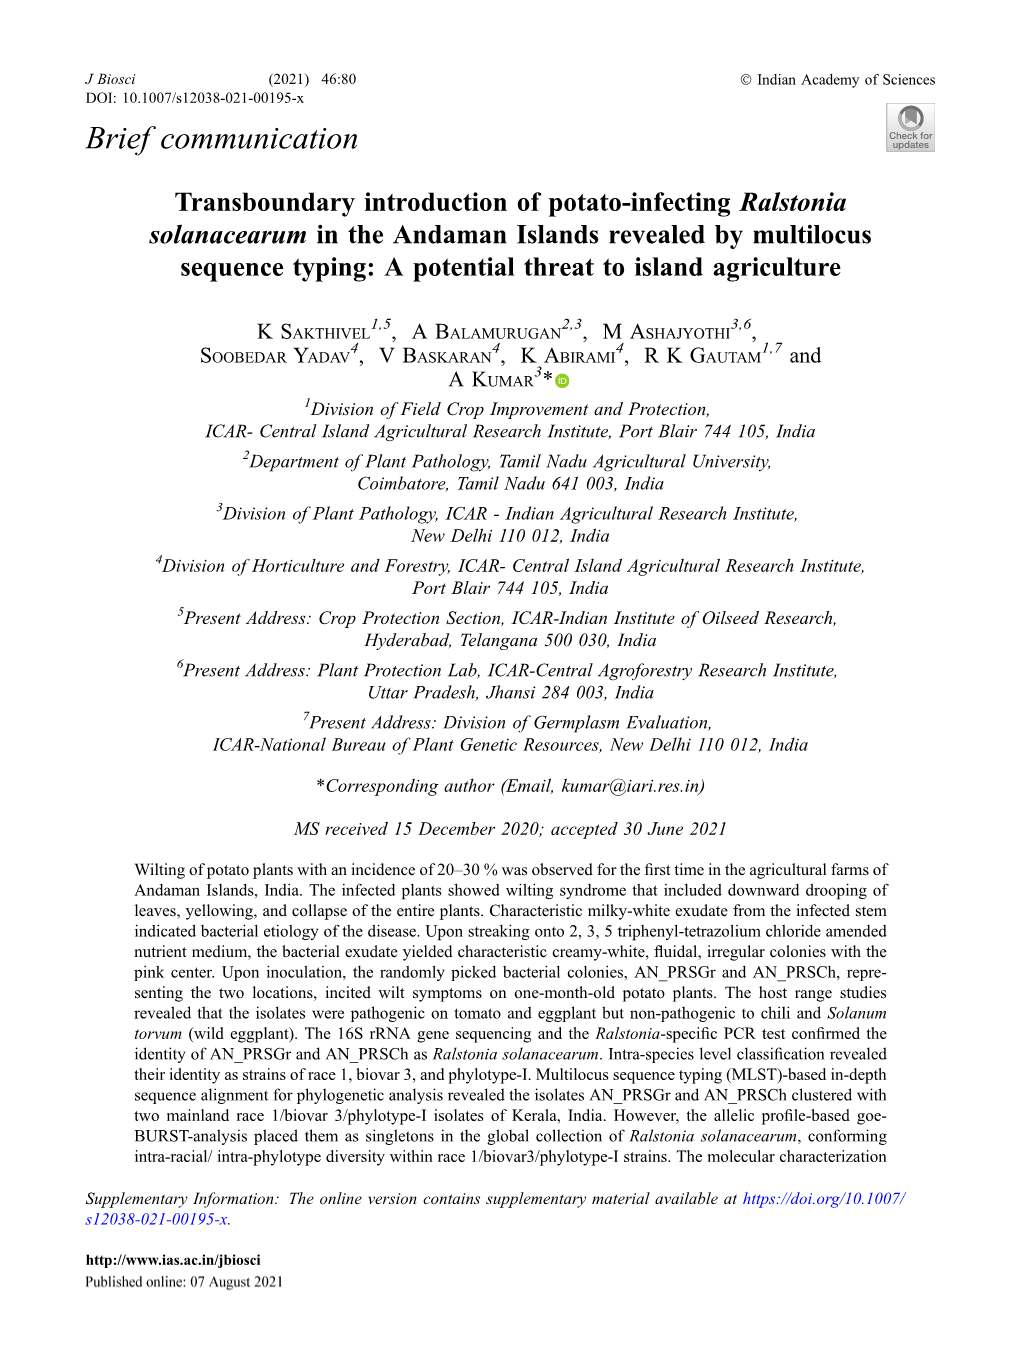 Transboundary Introduction of Potato-Infecting Ralstonia